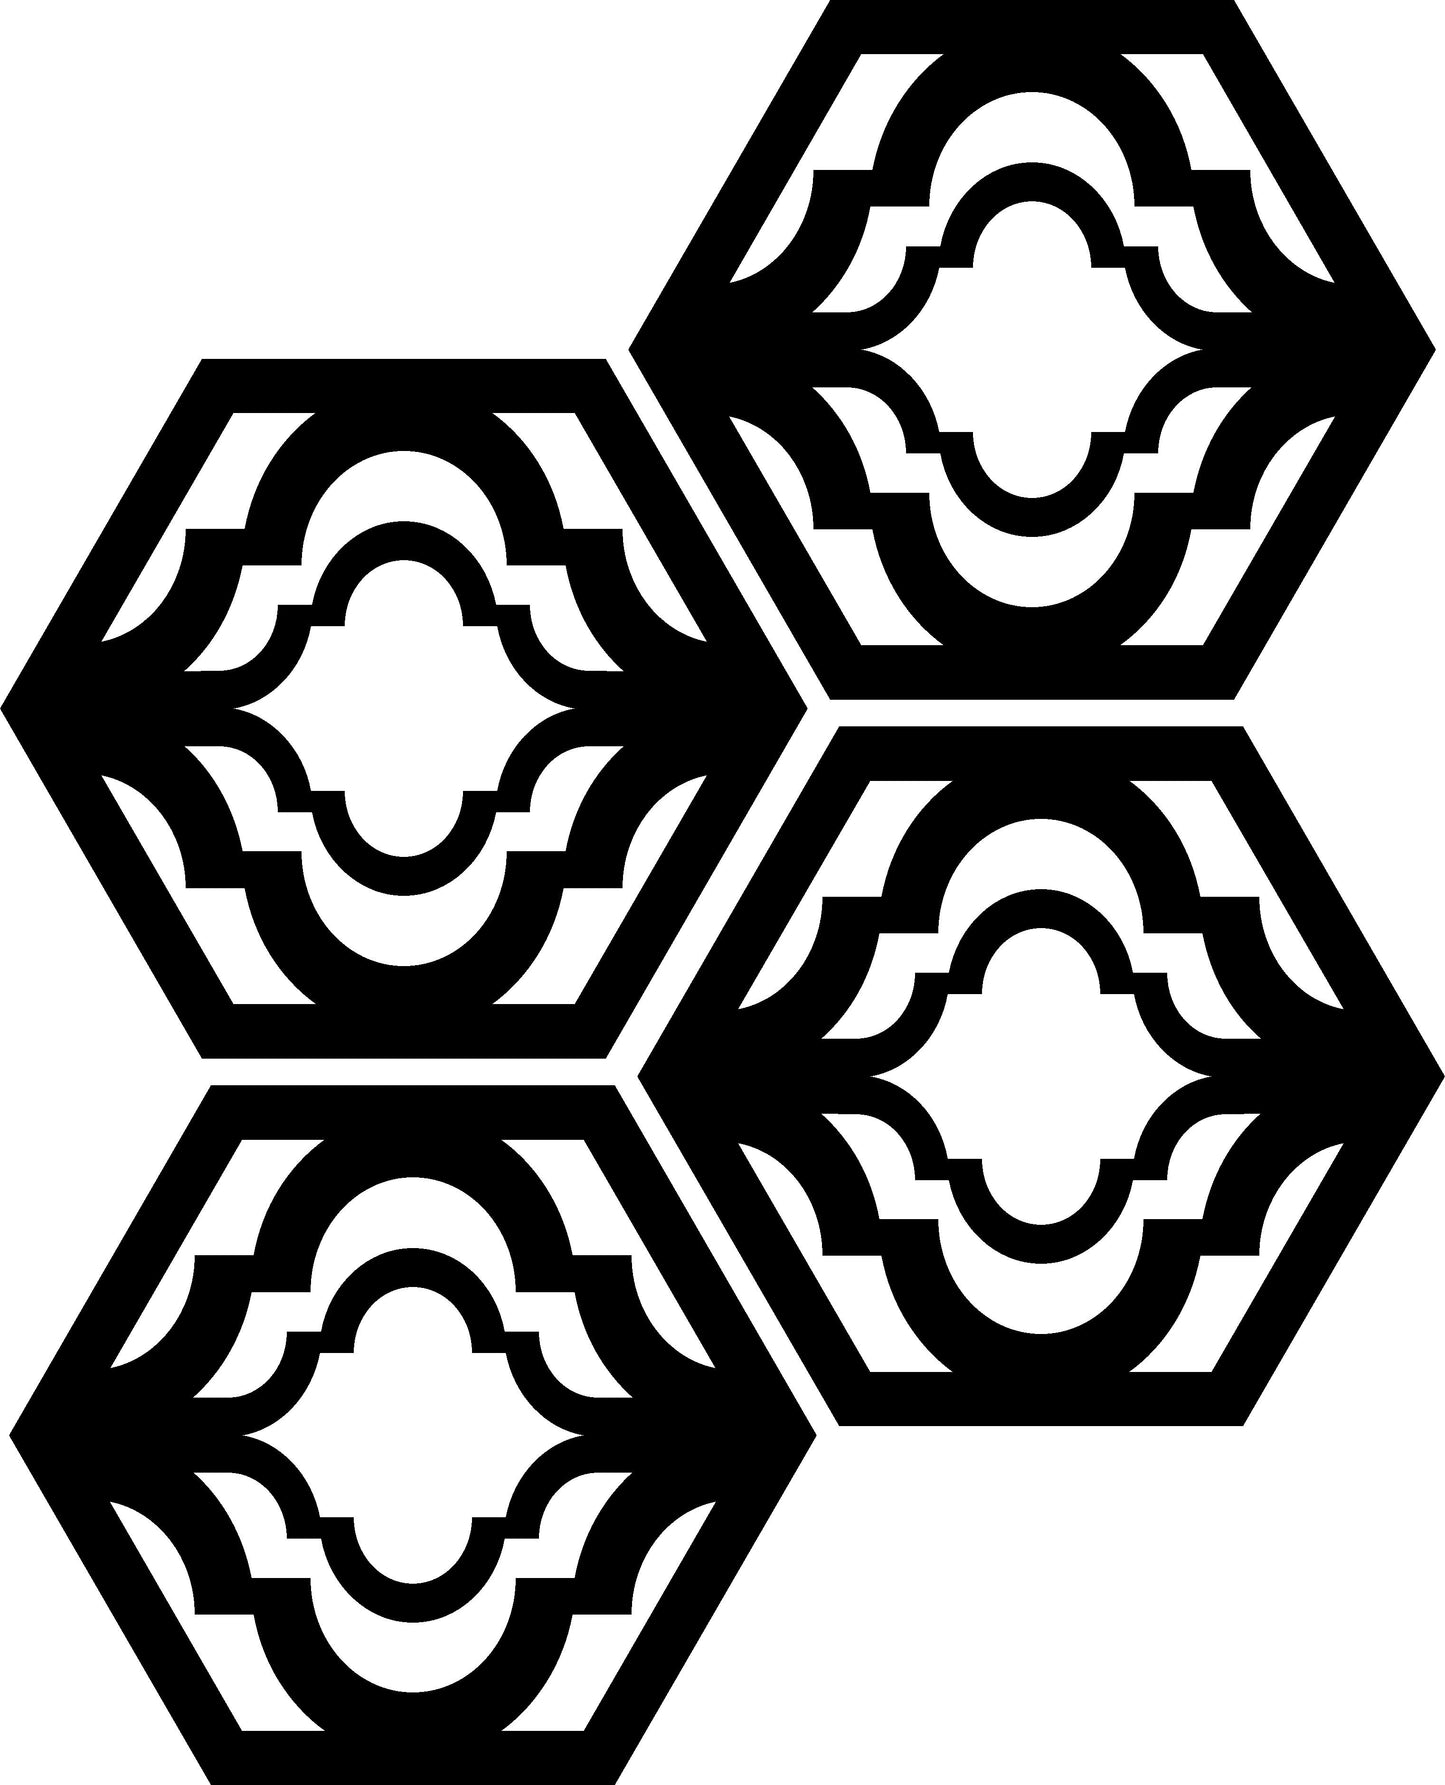 Hexagonal Design 2 (Large)